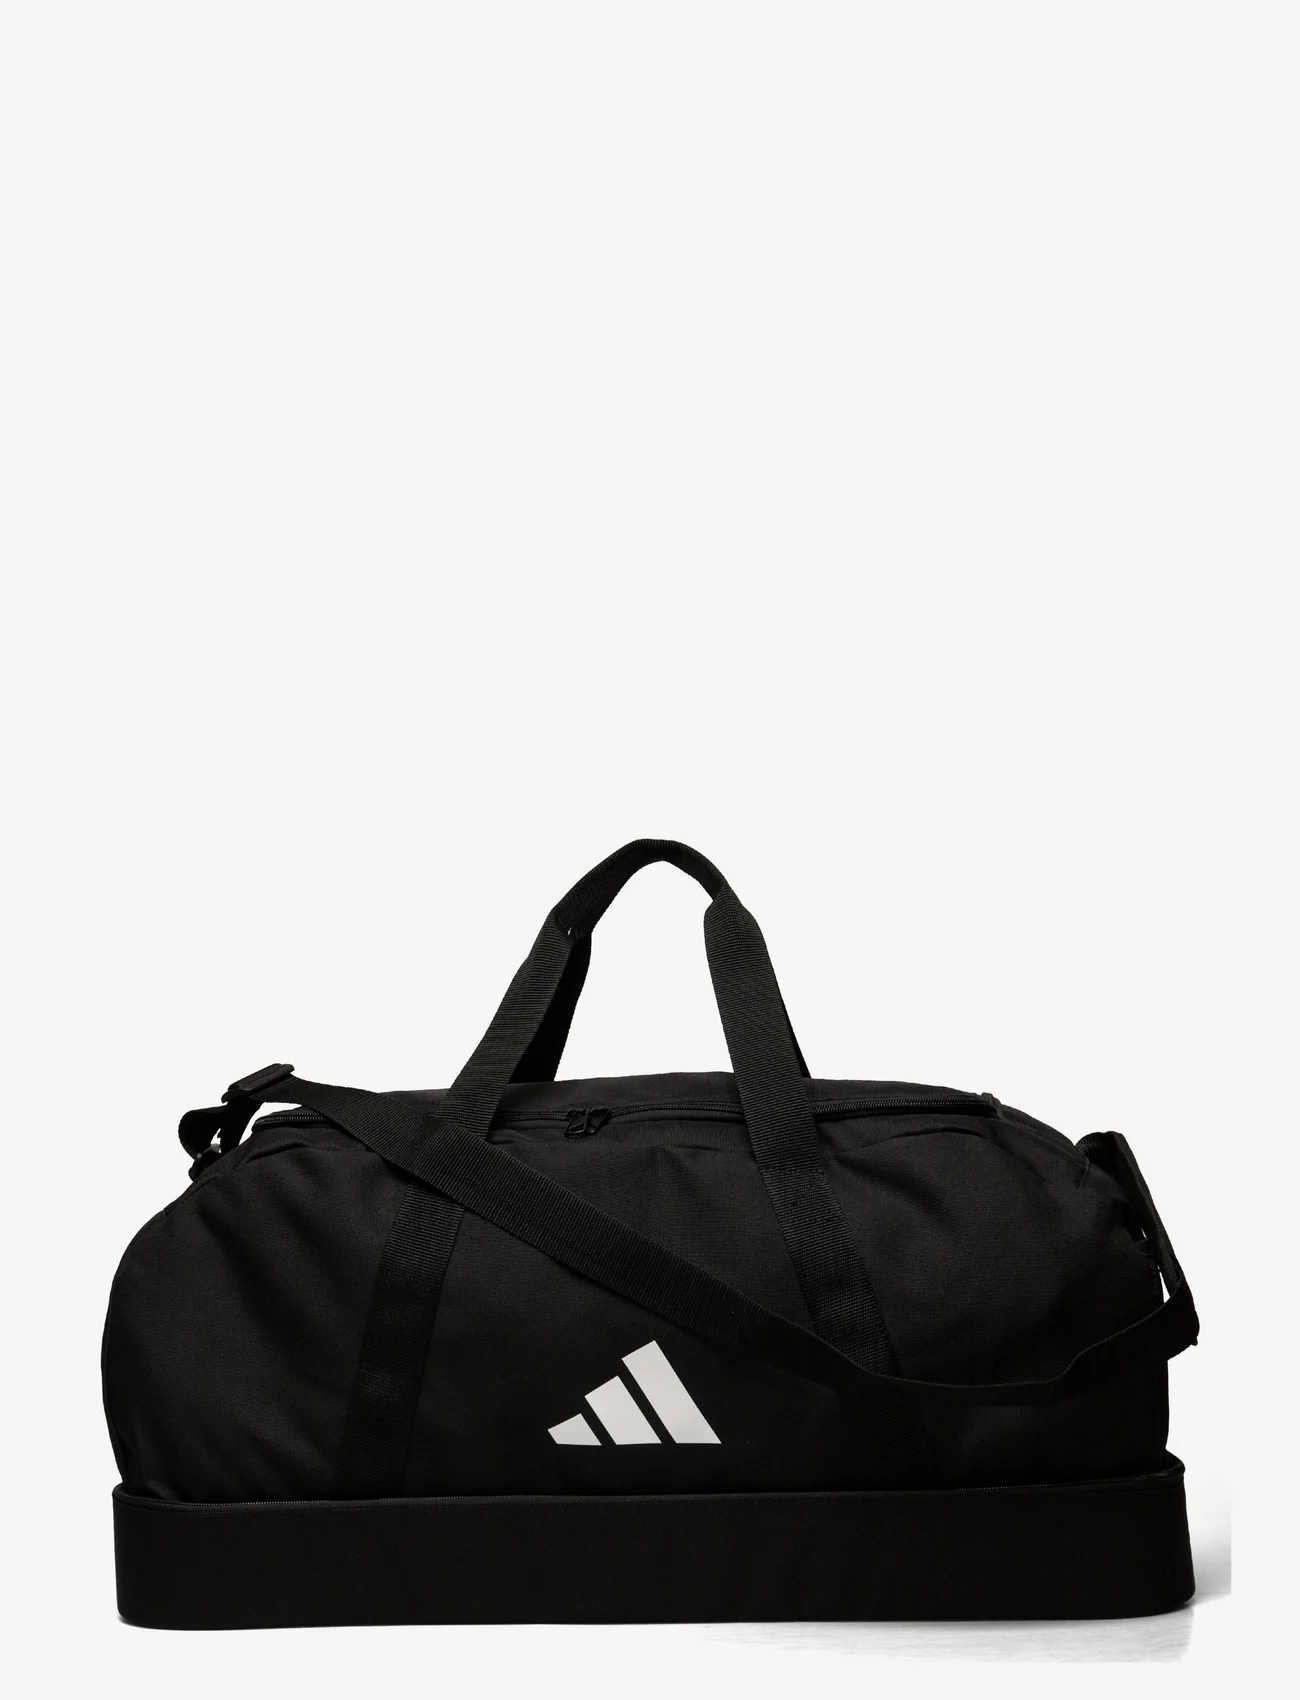 adidas Performance - TIRO LEAGUE DUFFLE BAG LARGE WITH BOTTOM COMPARTMENT - vyrams - black/white - 0